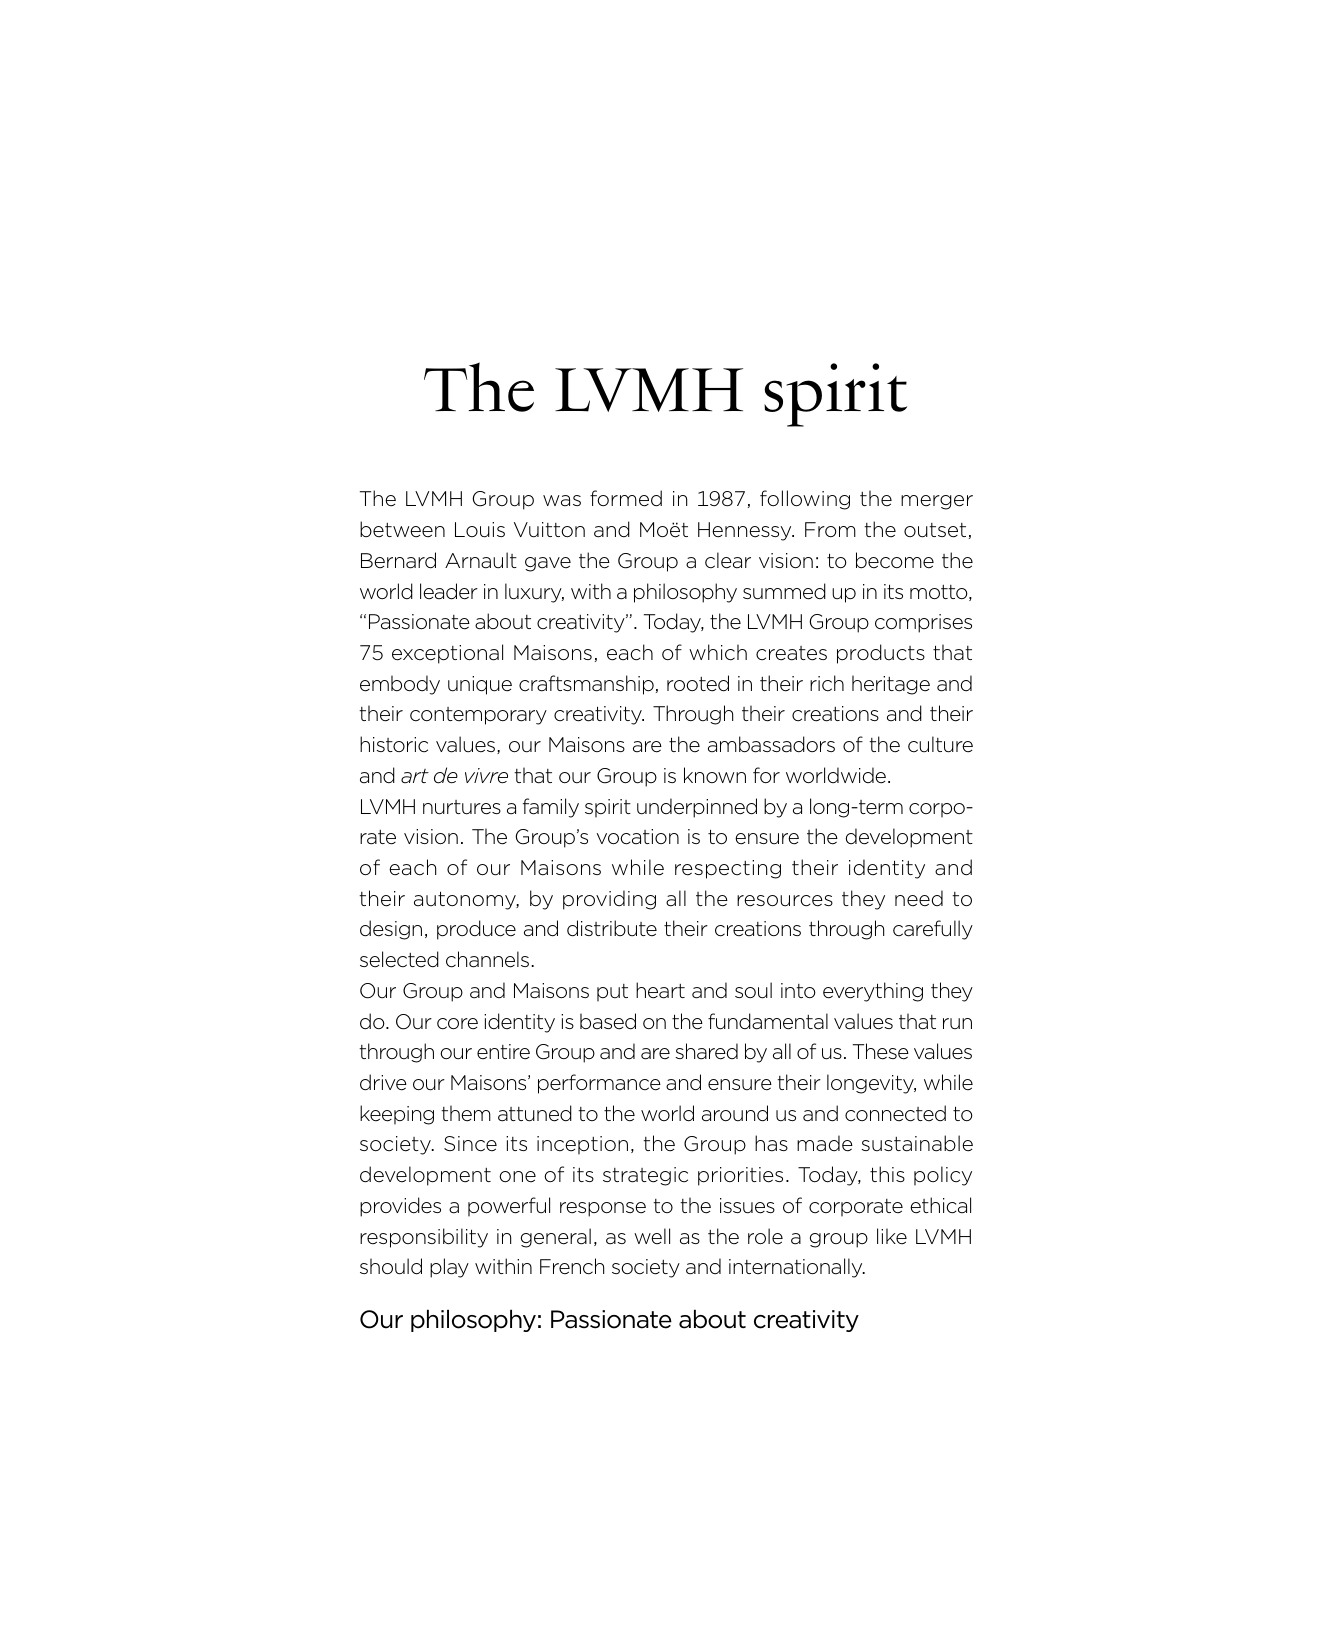 2022 Interactive Annual Report - LVMH